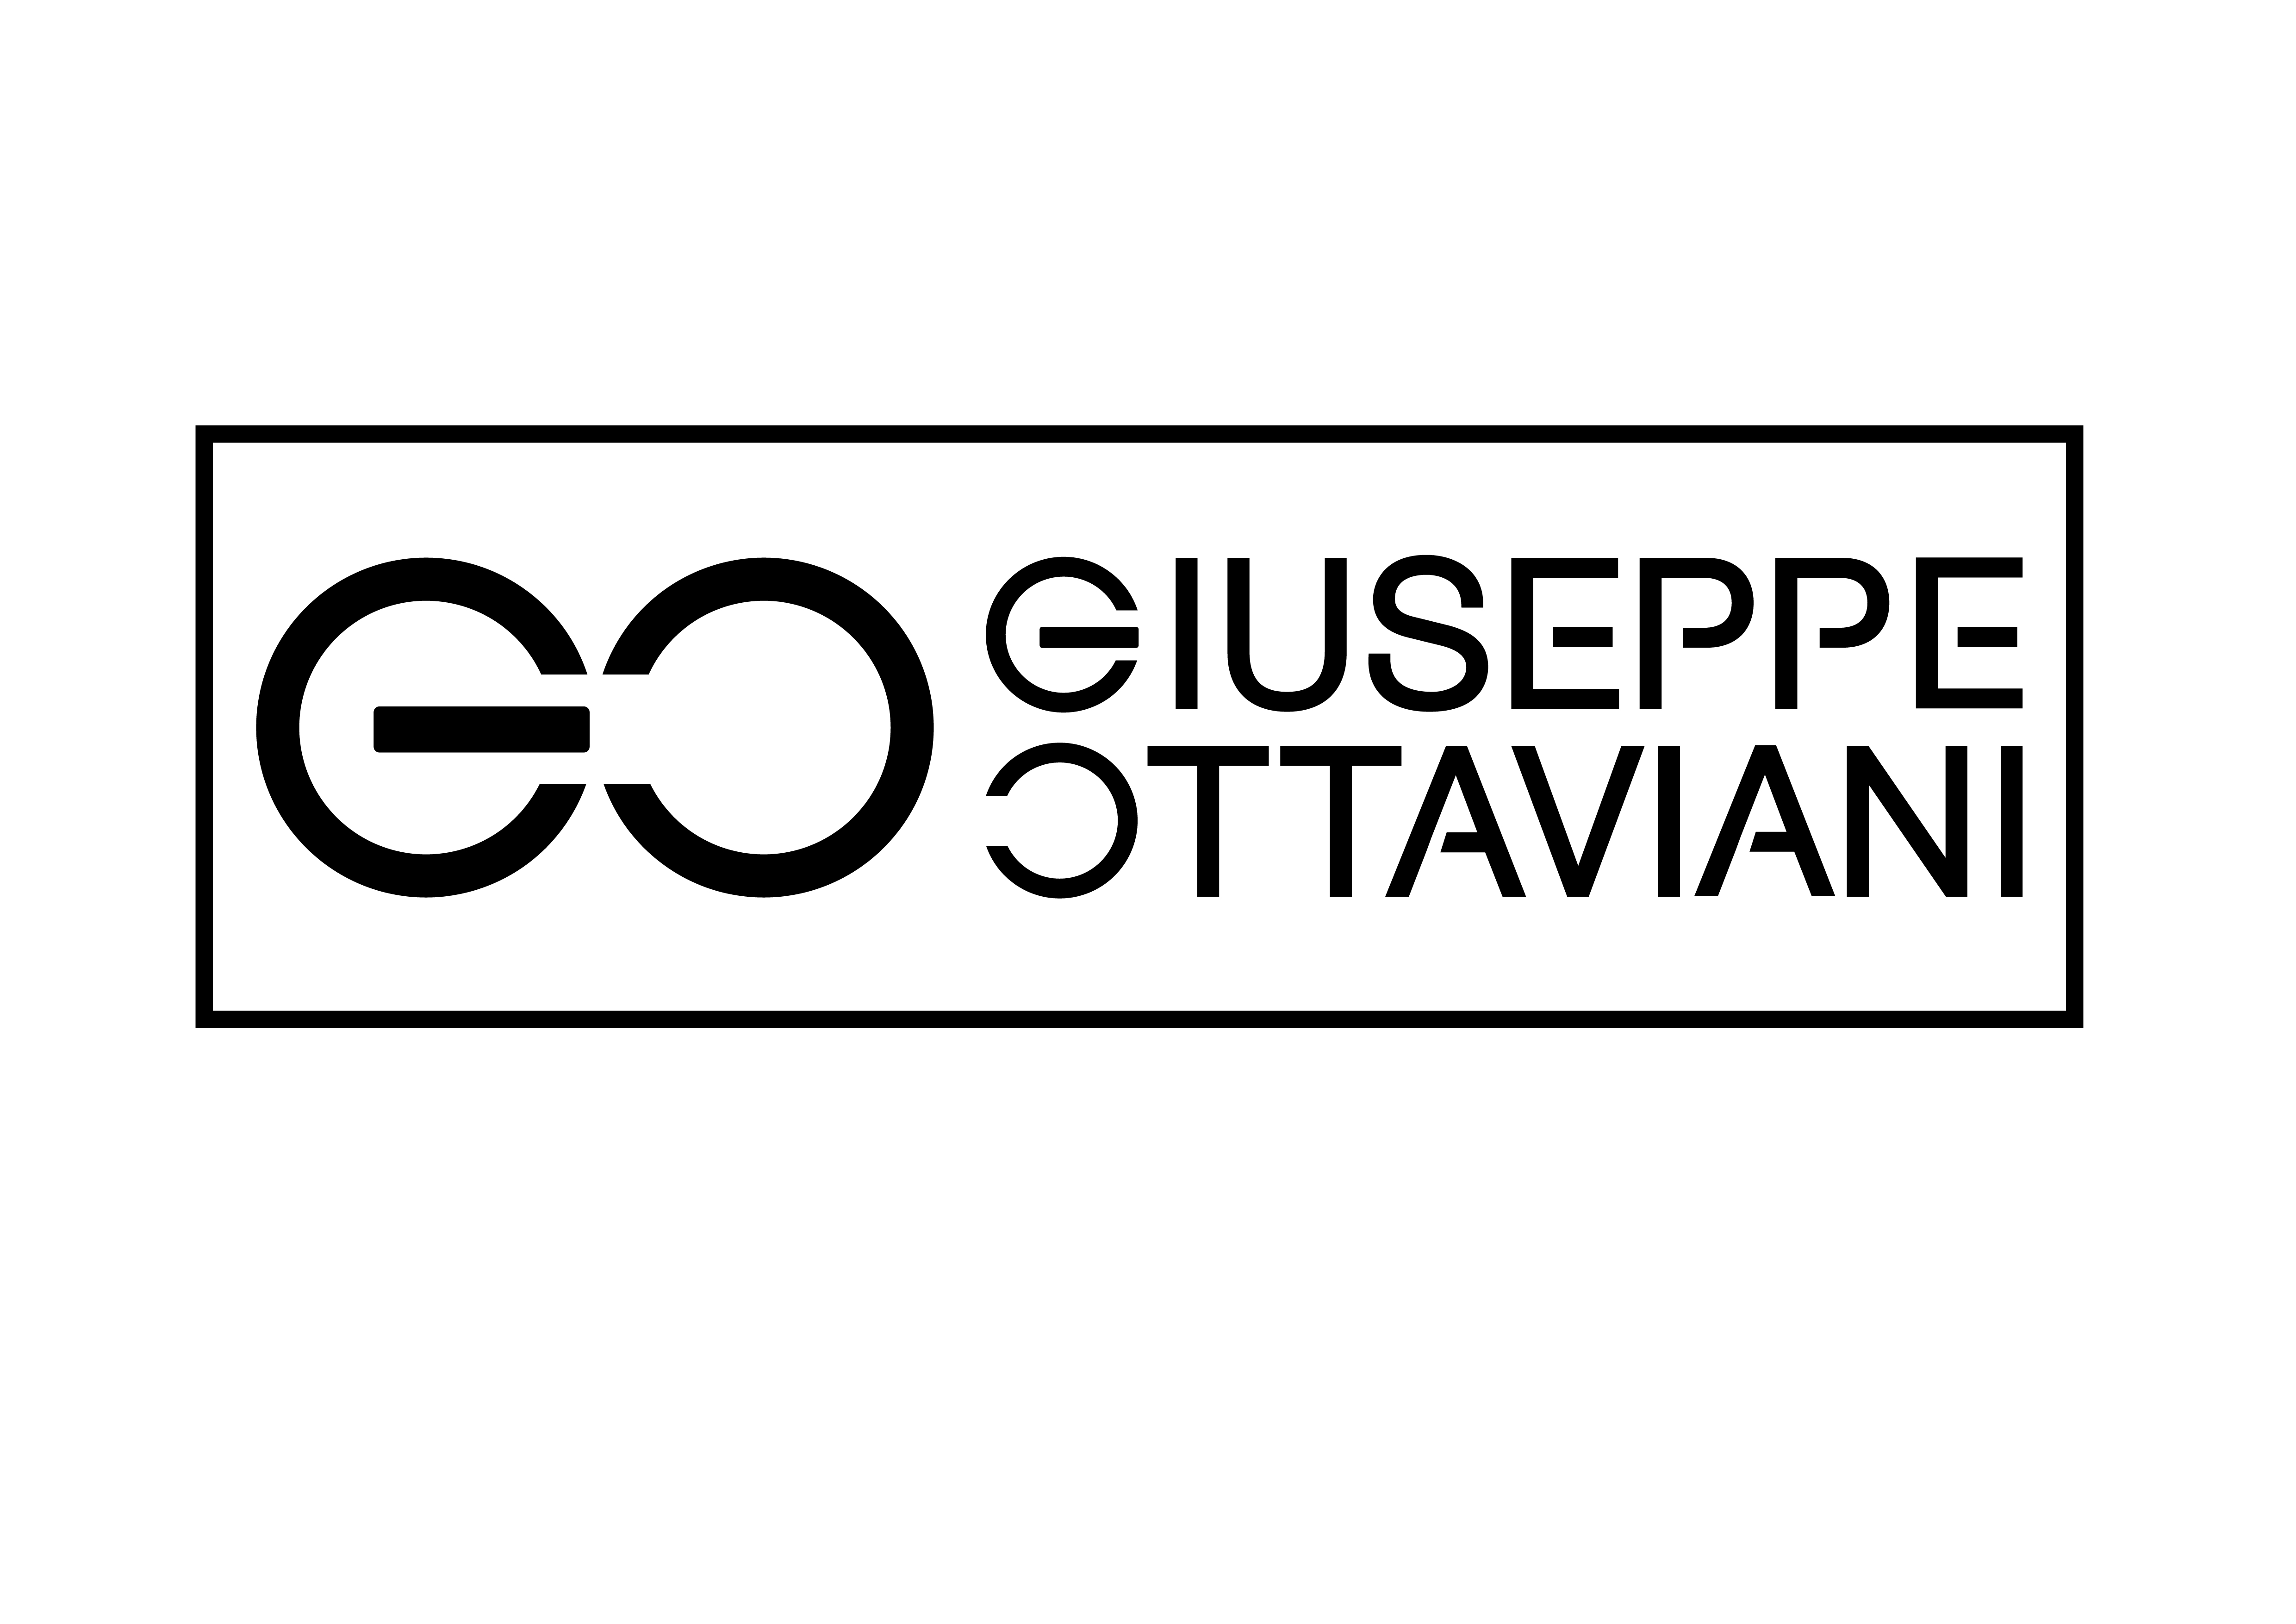 Giuseppe Ottaviani - logo